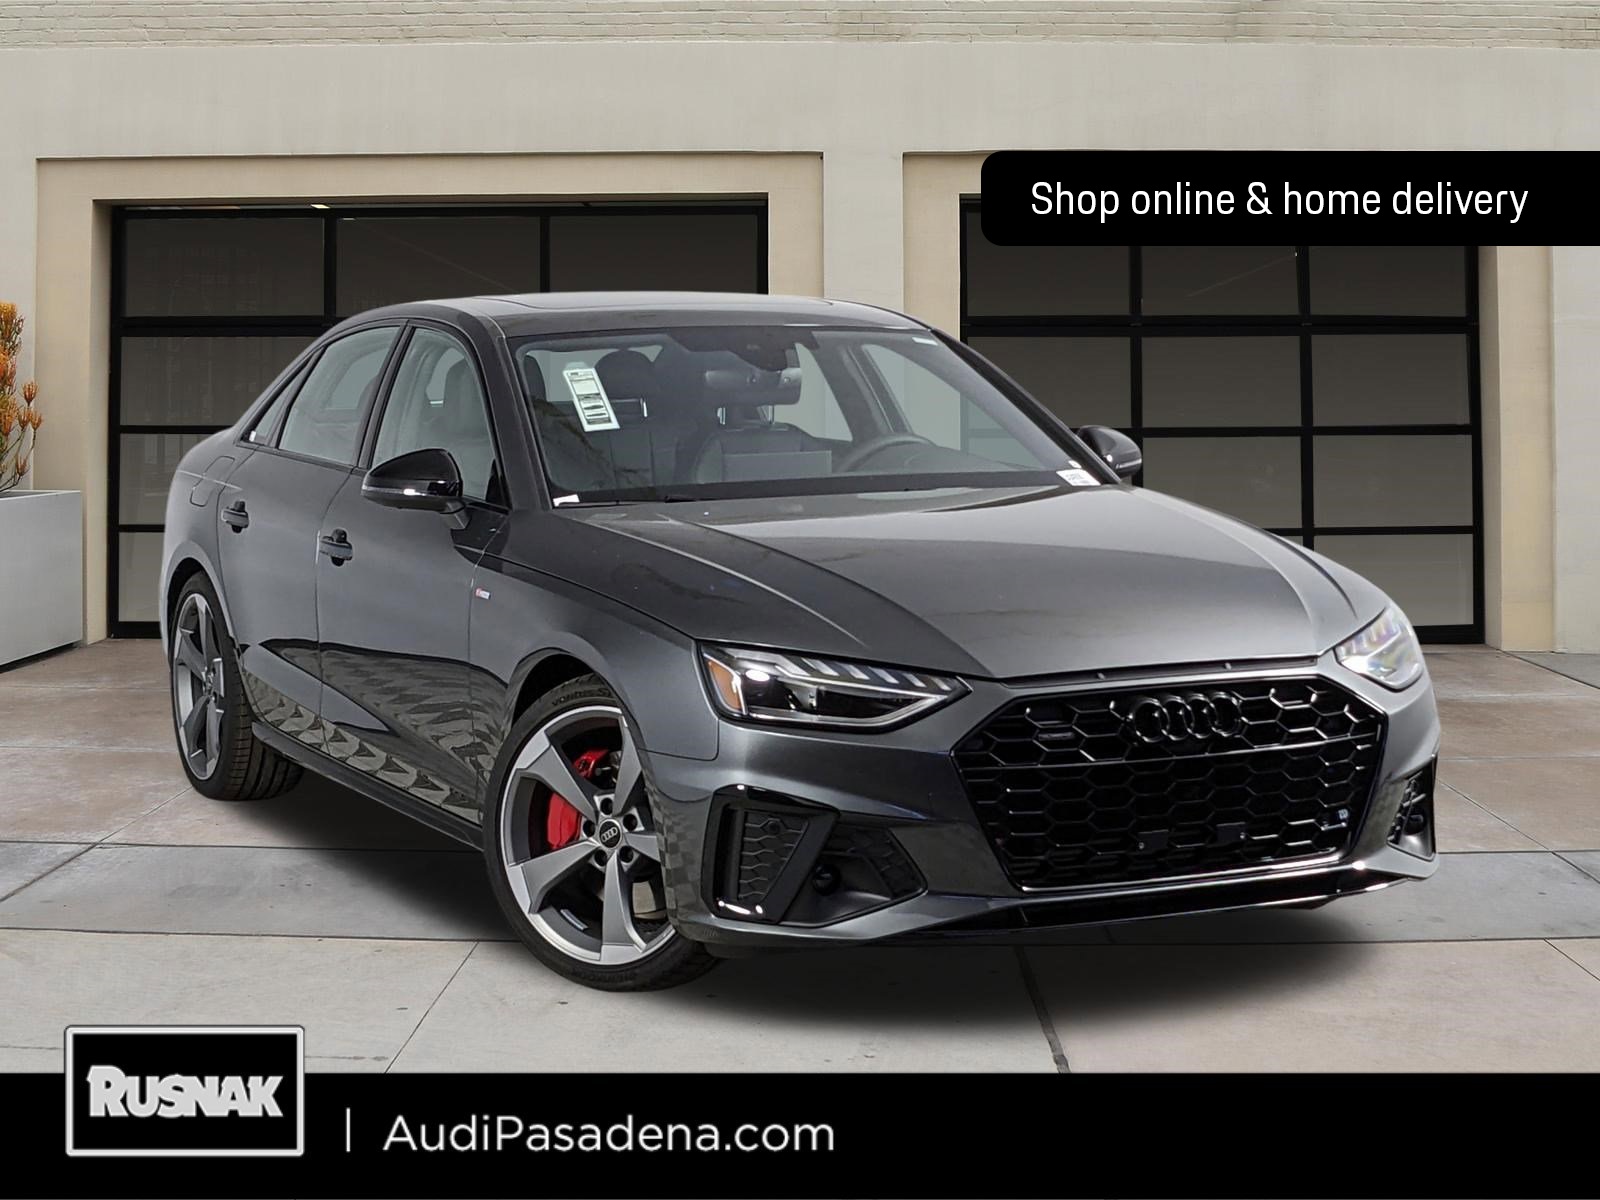 New Audi A4 For Sale Near Me | Auto Navigator